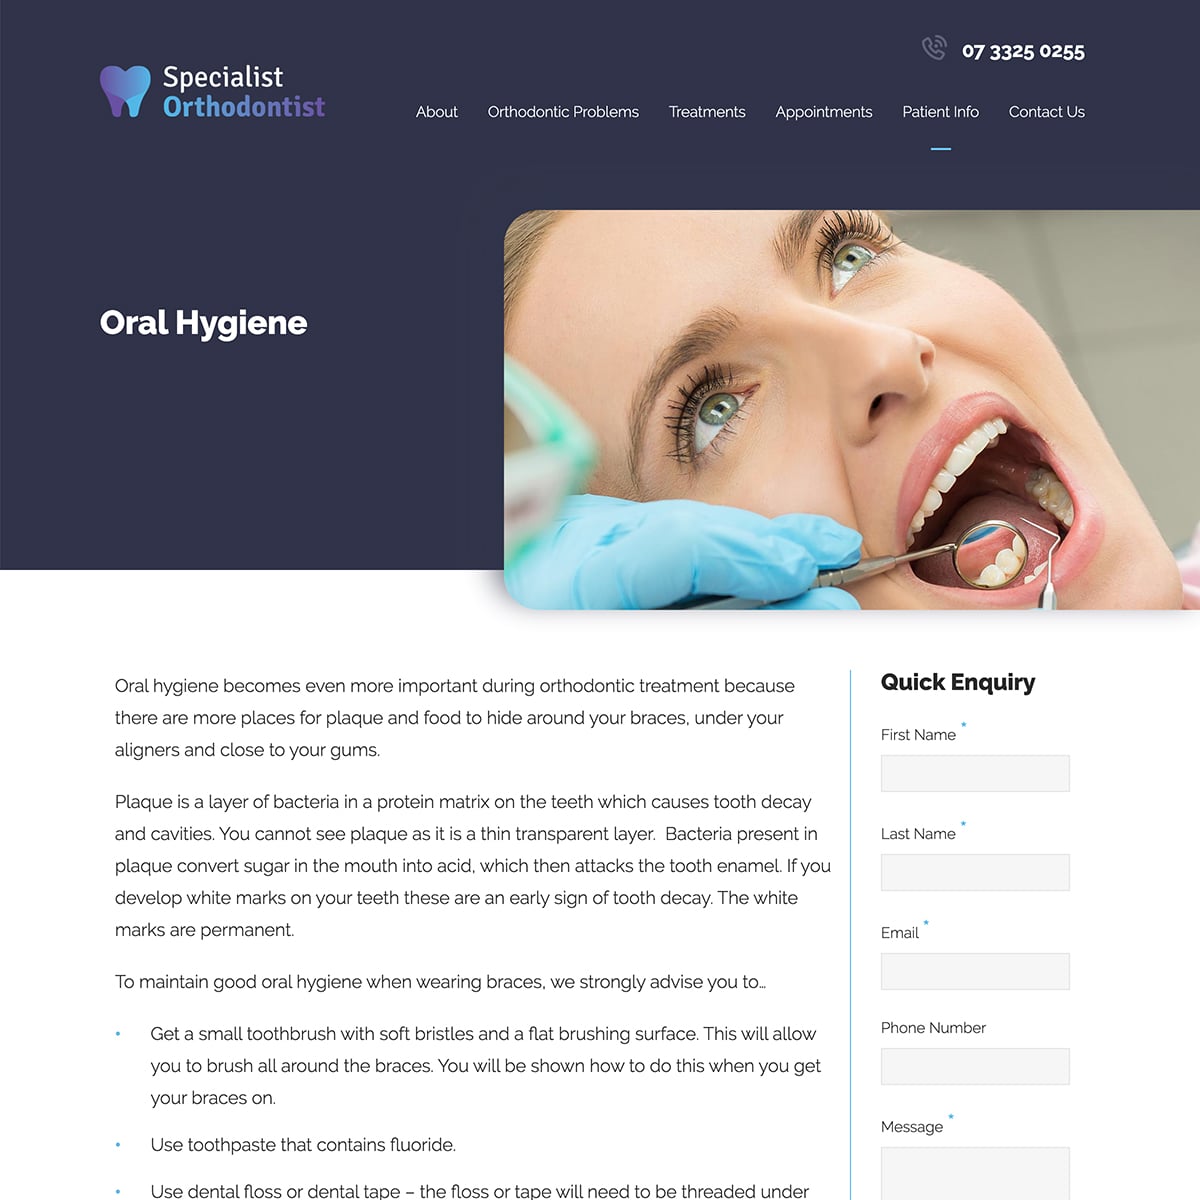 Specialist Orthodontist - Patient Info